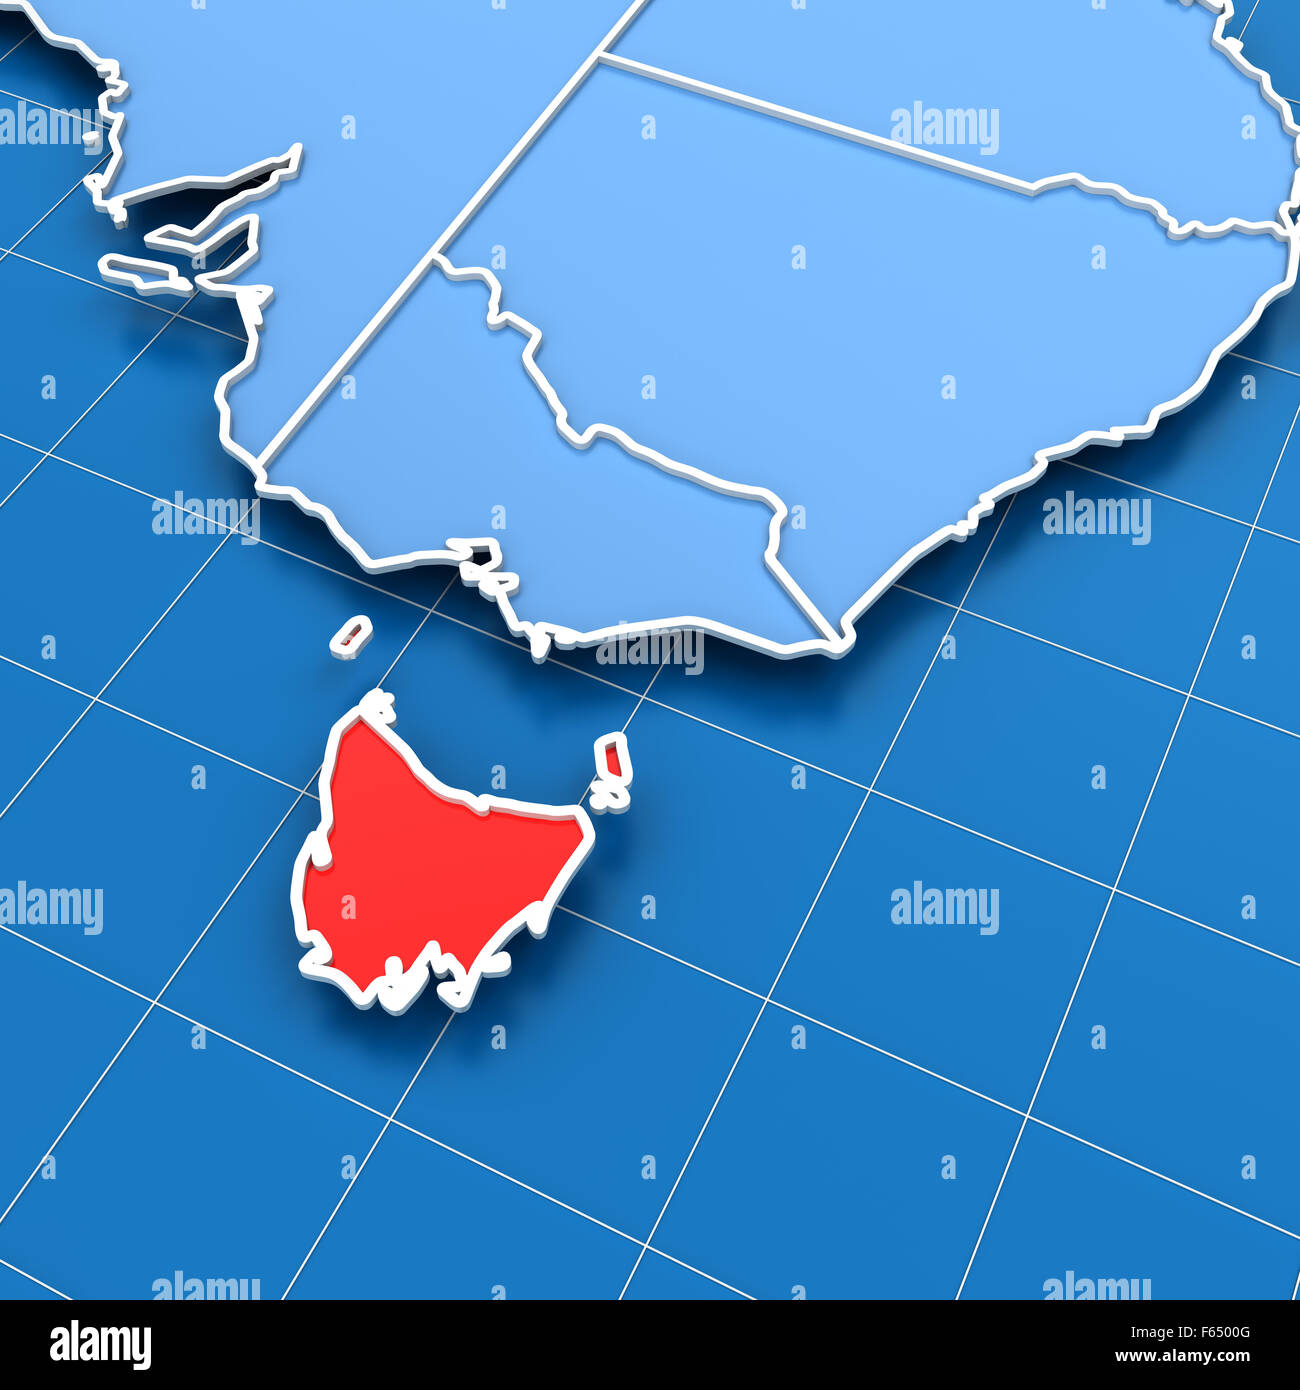 Australia map with Tasmania state highlighted Stock Photo